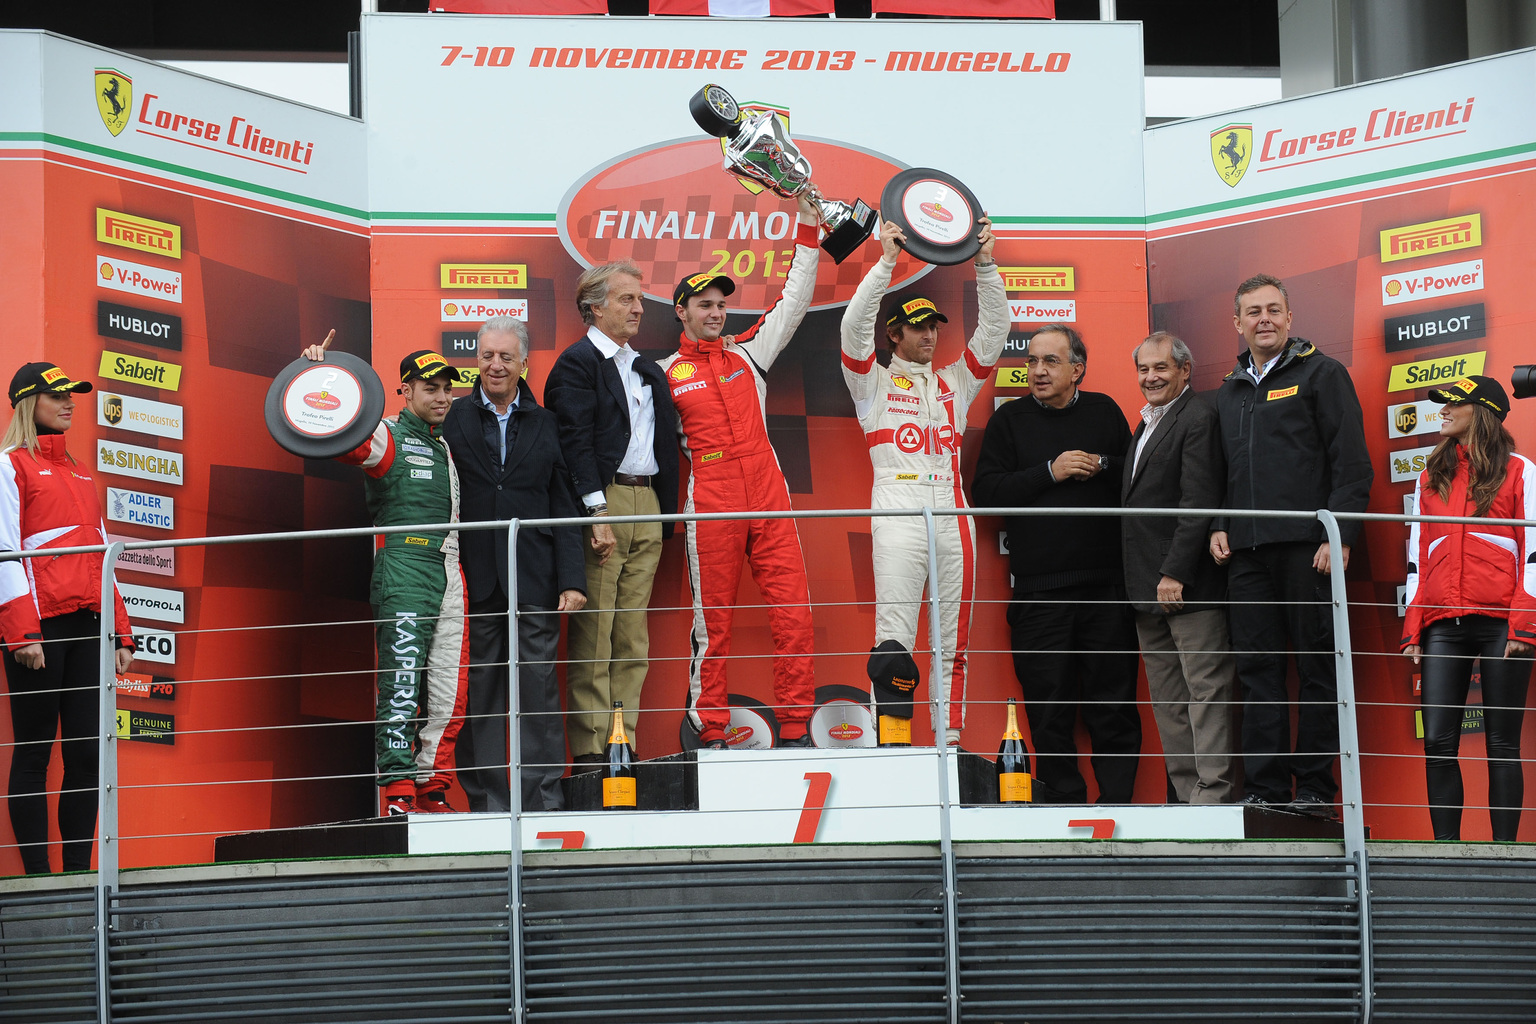 2013 Finali Mondiali Ferrari-2